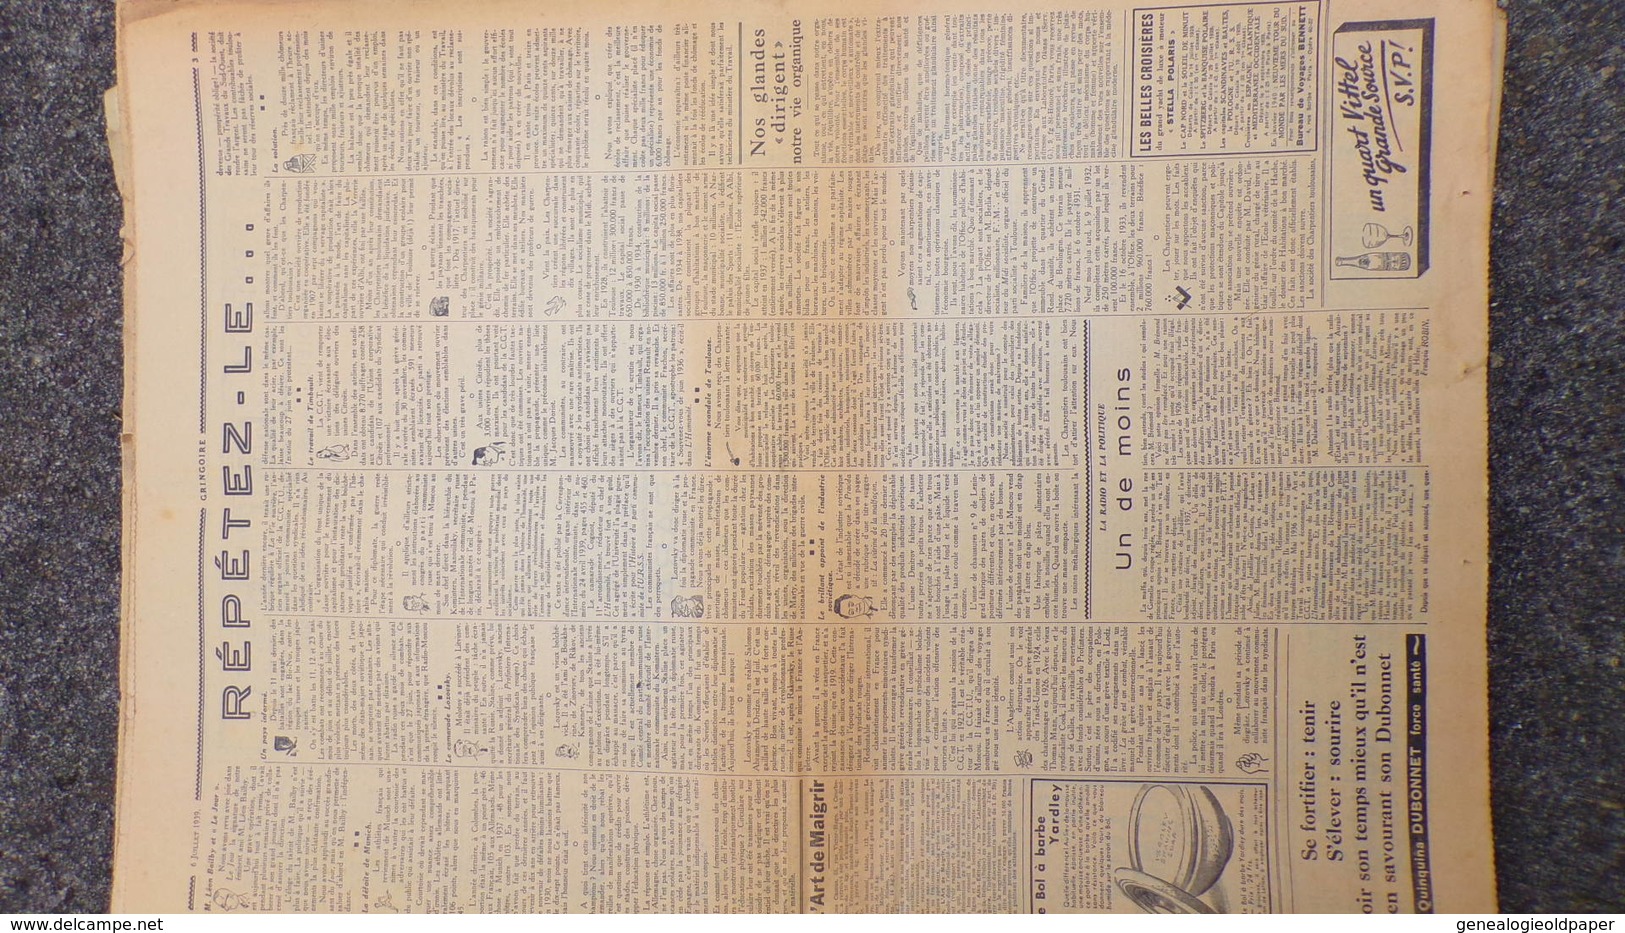 GRINGOIRE -6 JUILLET 1939-N° 556-JOURNAL WW2 PRESSE HEBDO-PARIS-BERAUD-TARDIEU-RECOULY-HITLER-TURQUIE-DANTAZIG-GAMELIN - Français